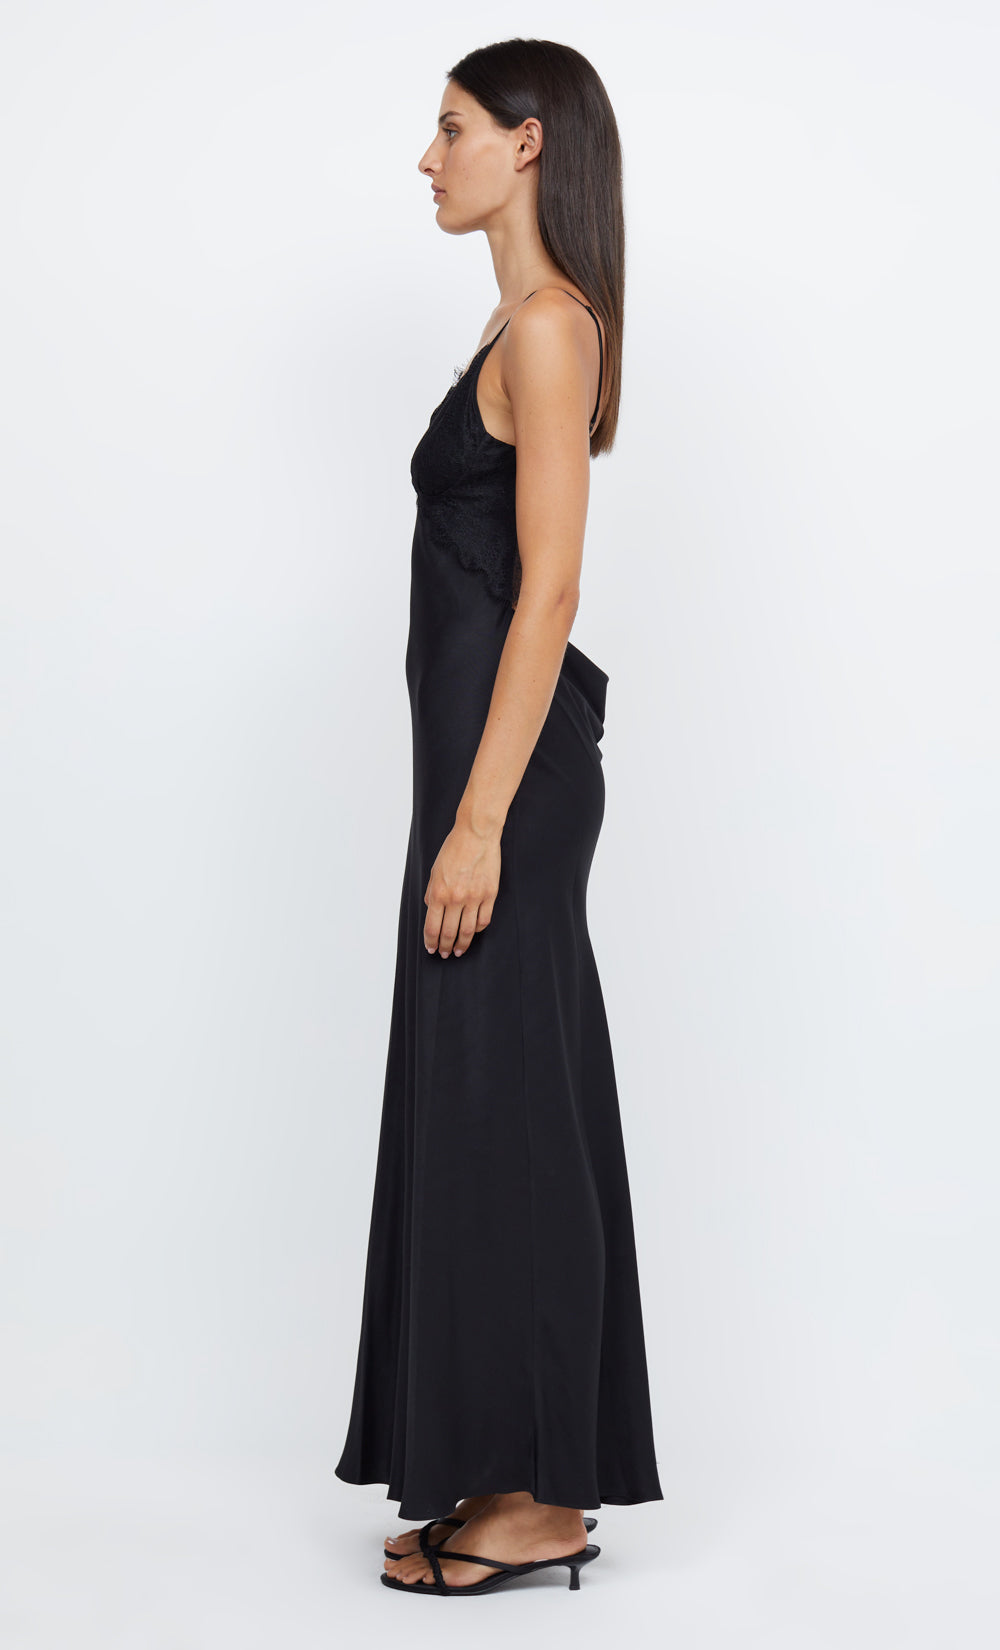 Hire Bec + Bridge Emery Lace Maxi Dress in Ivory Black